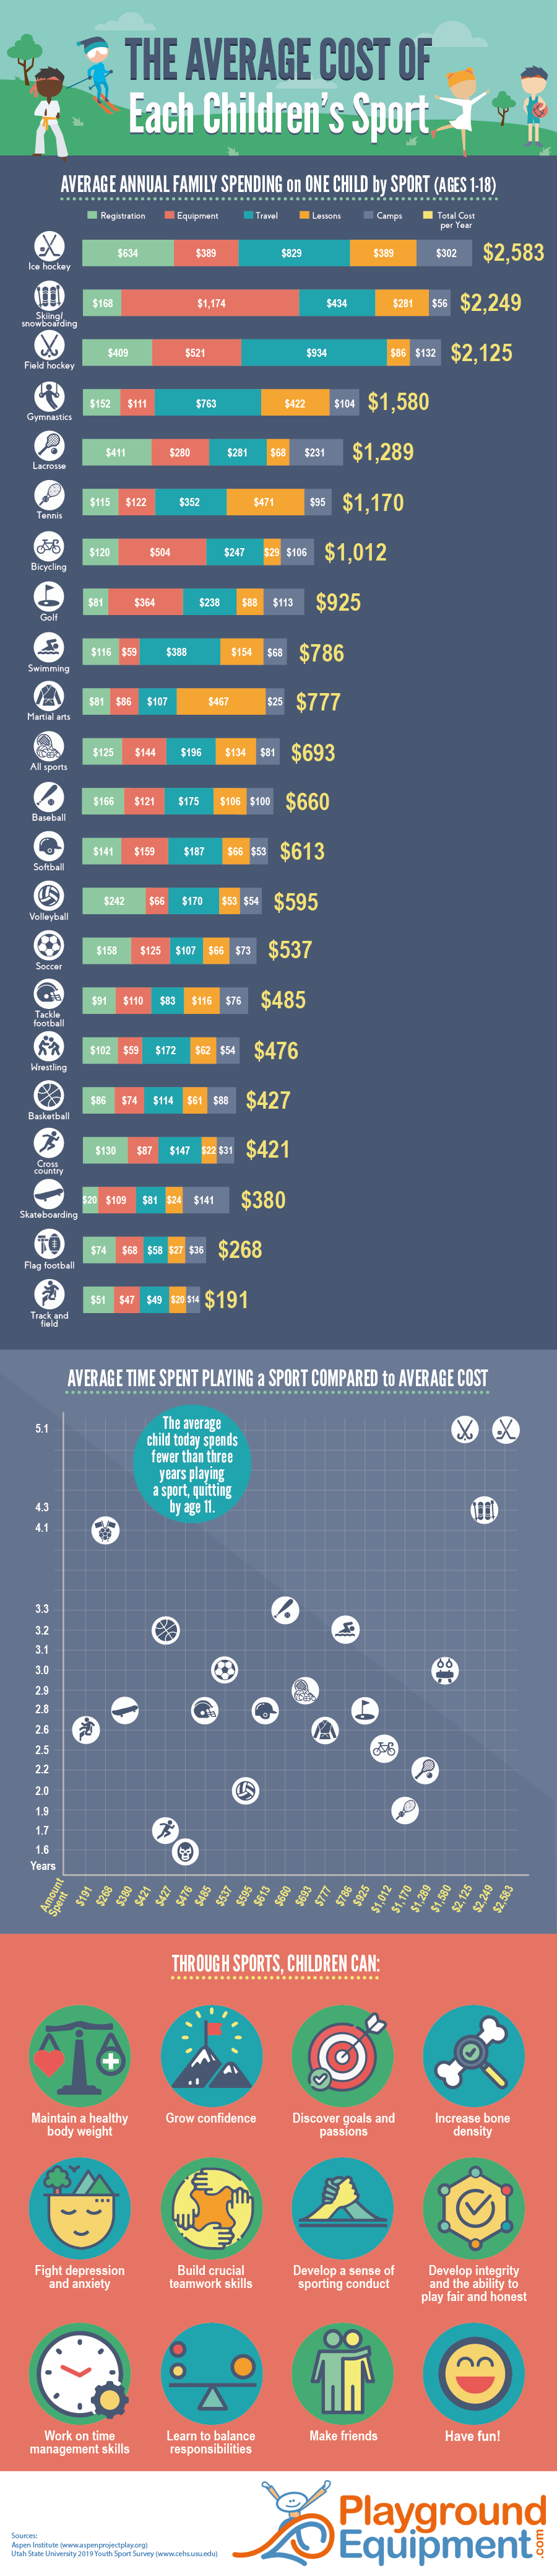 The Average Cost of Each Children's Sport - PlaygroundEquipment.com - Infographic